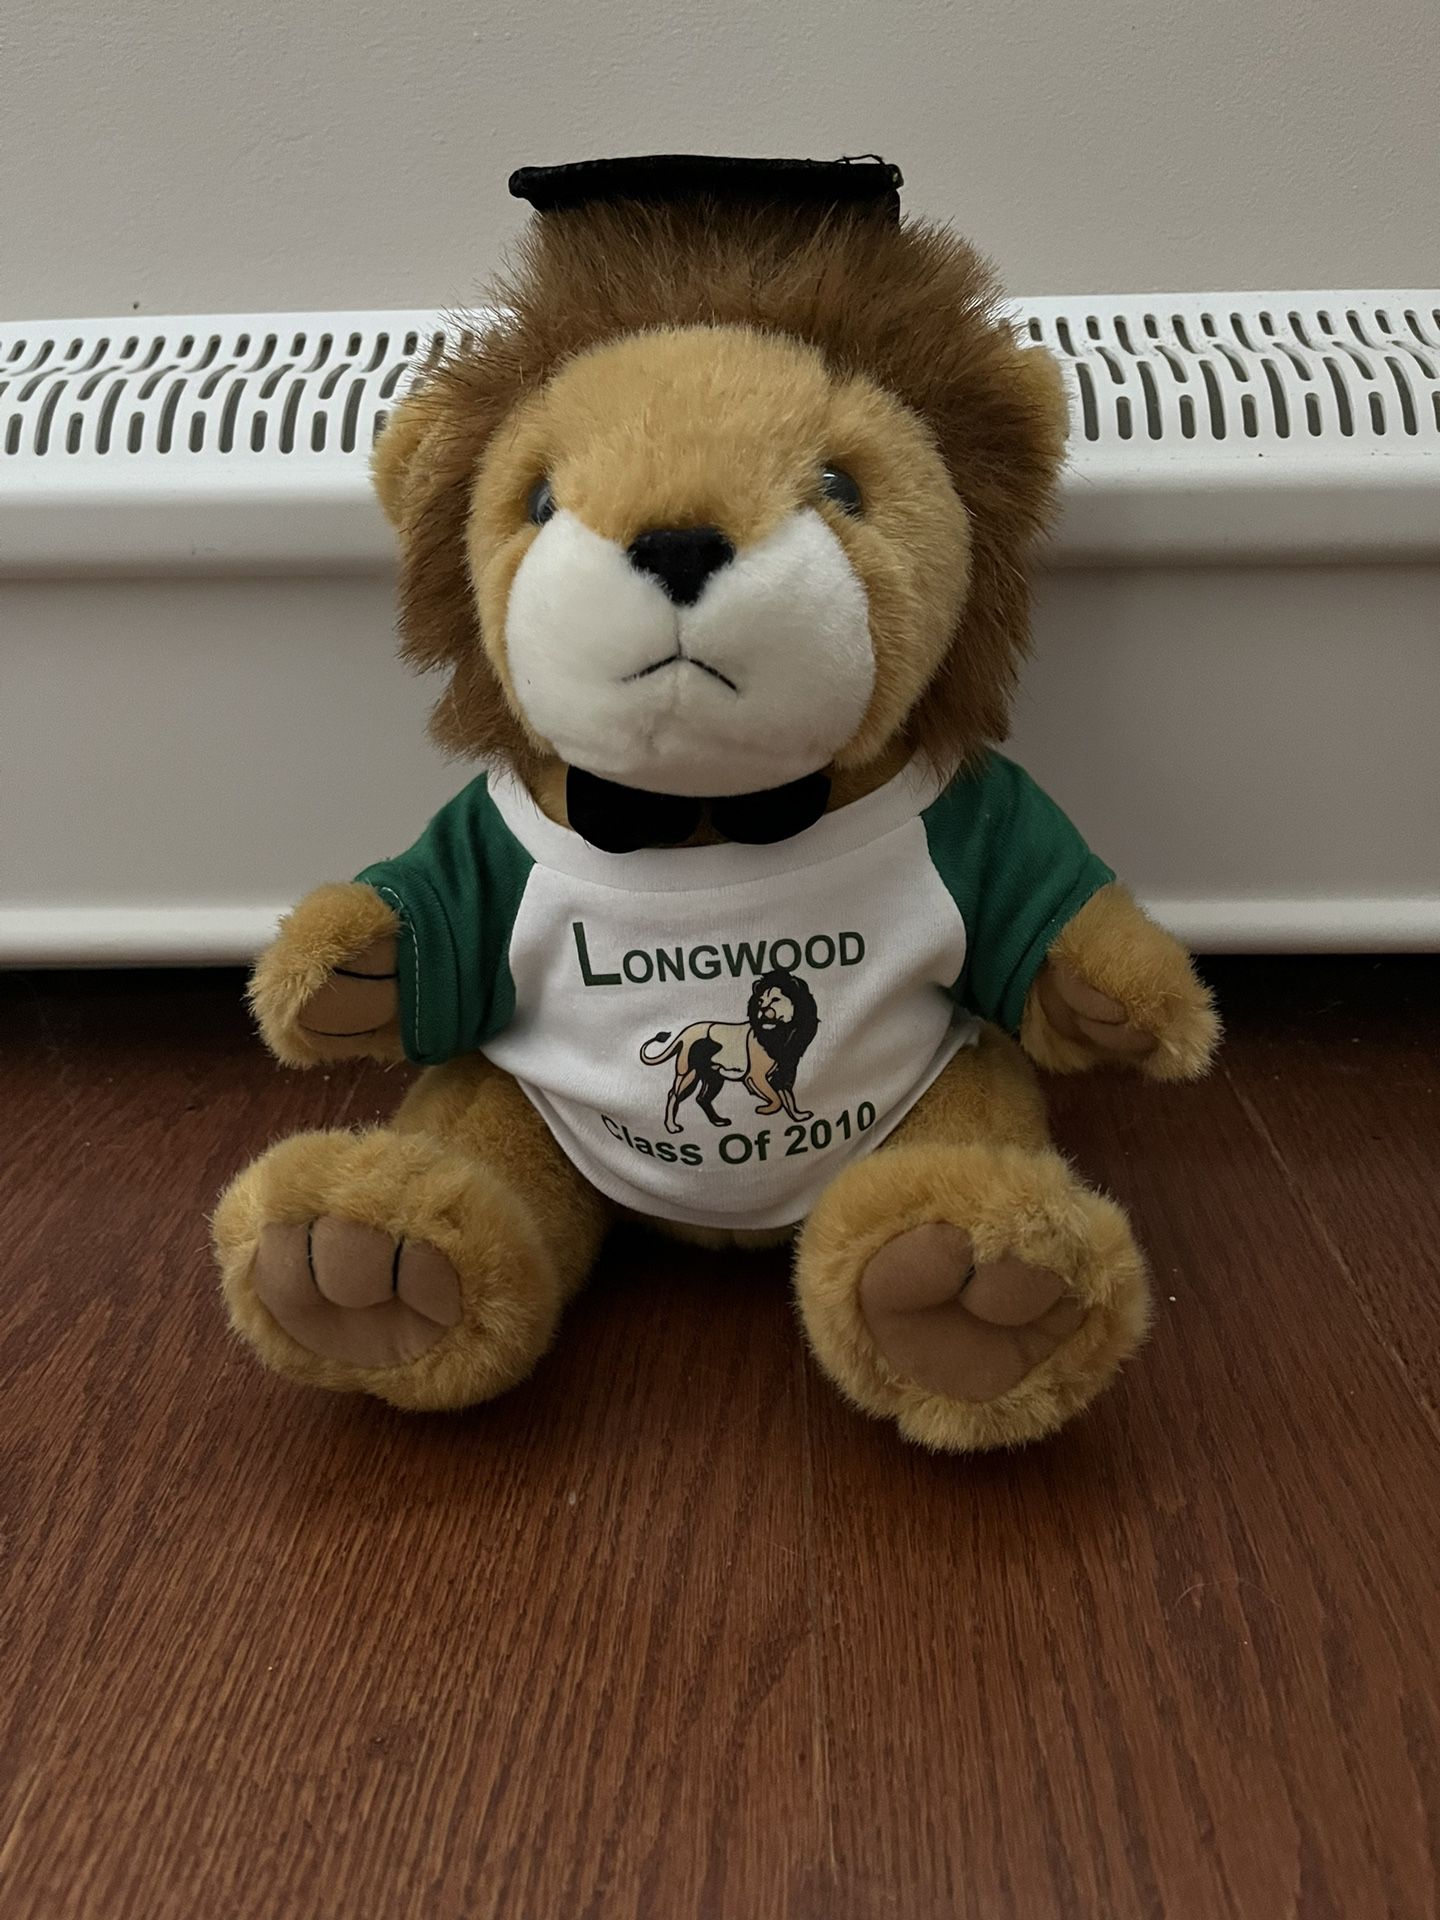 Class of 2010 Longwood graduation teddy bear.